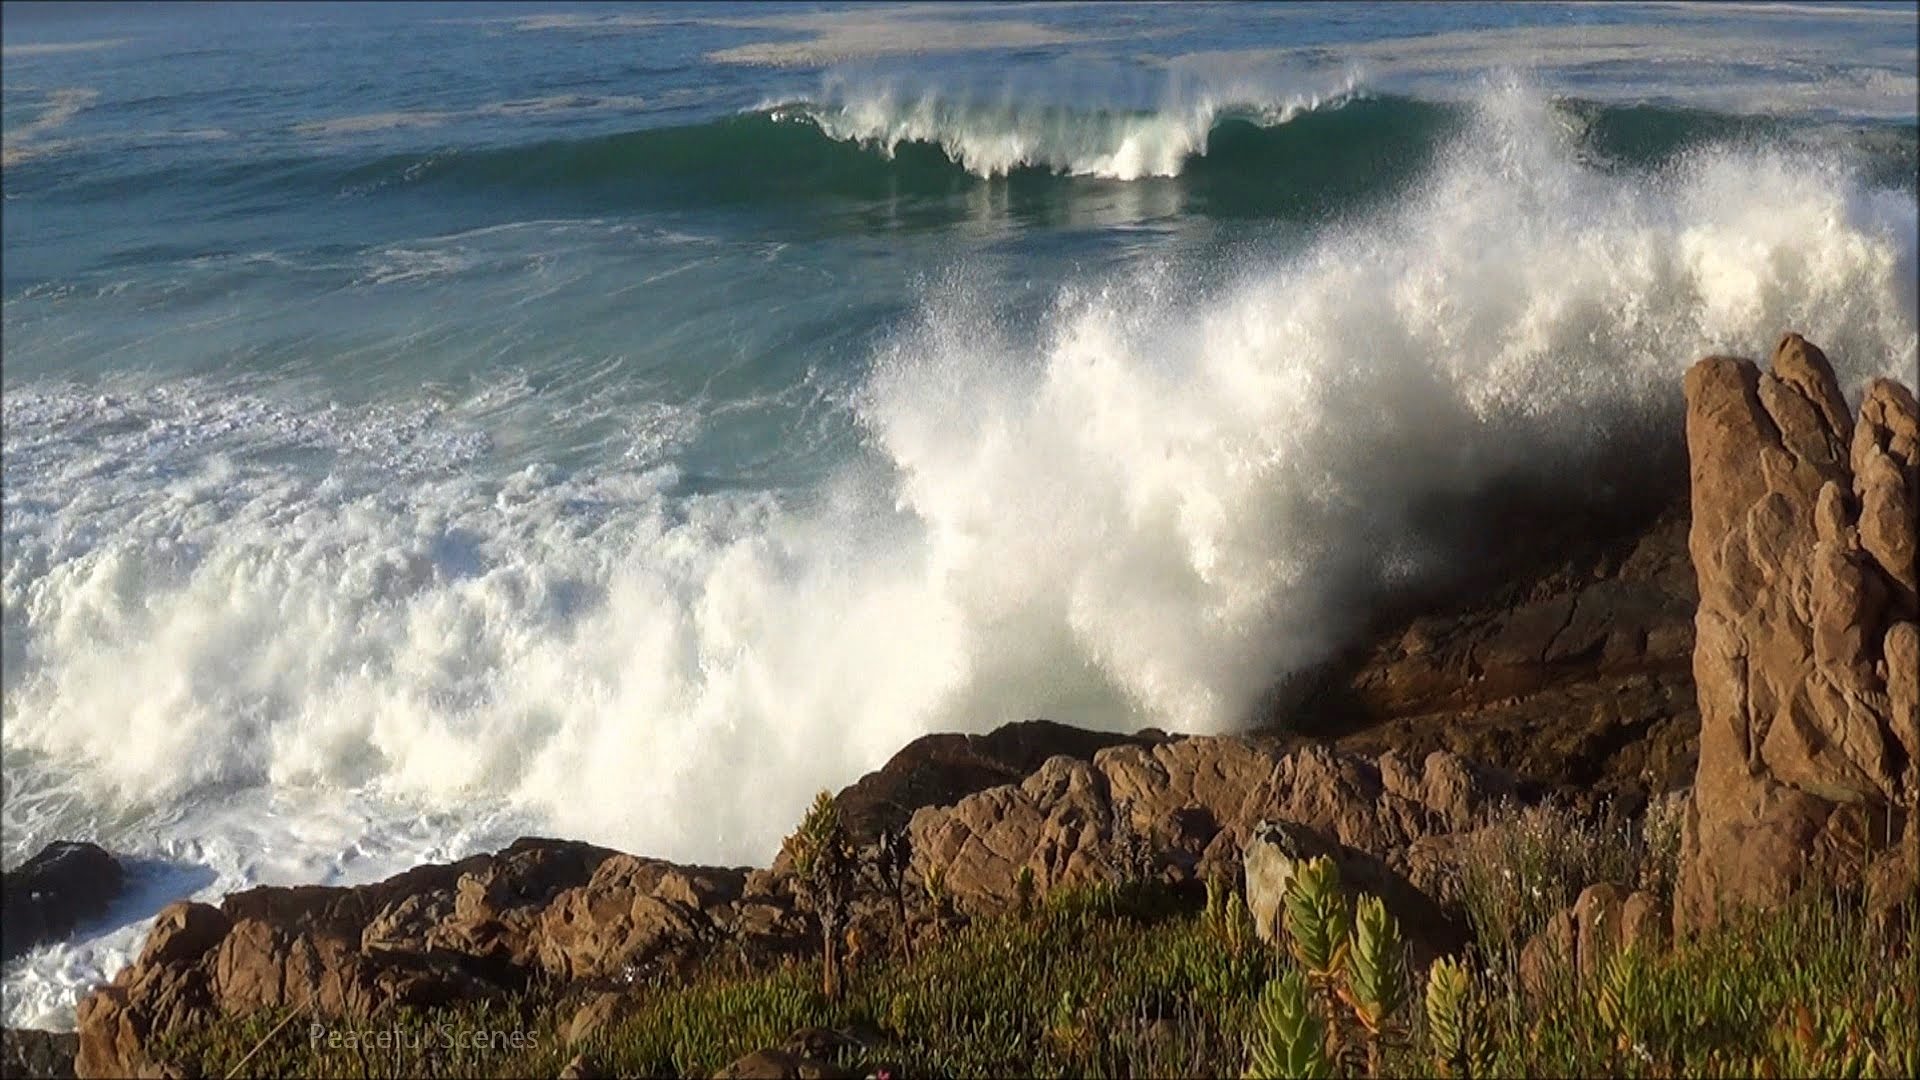 60min ocean waves crashing into rocky shore - sounds of the ocean in ...